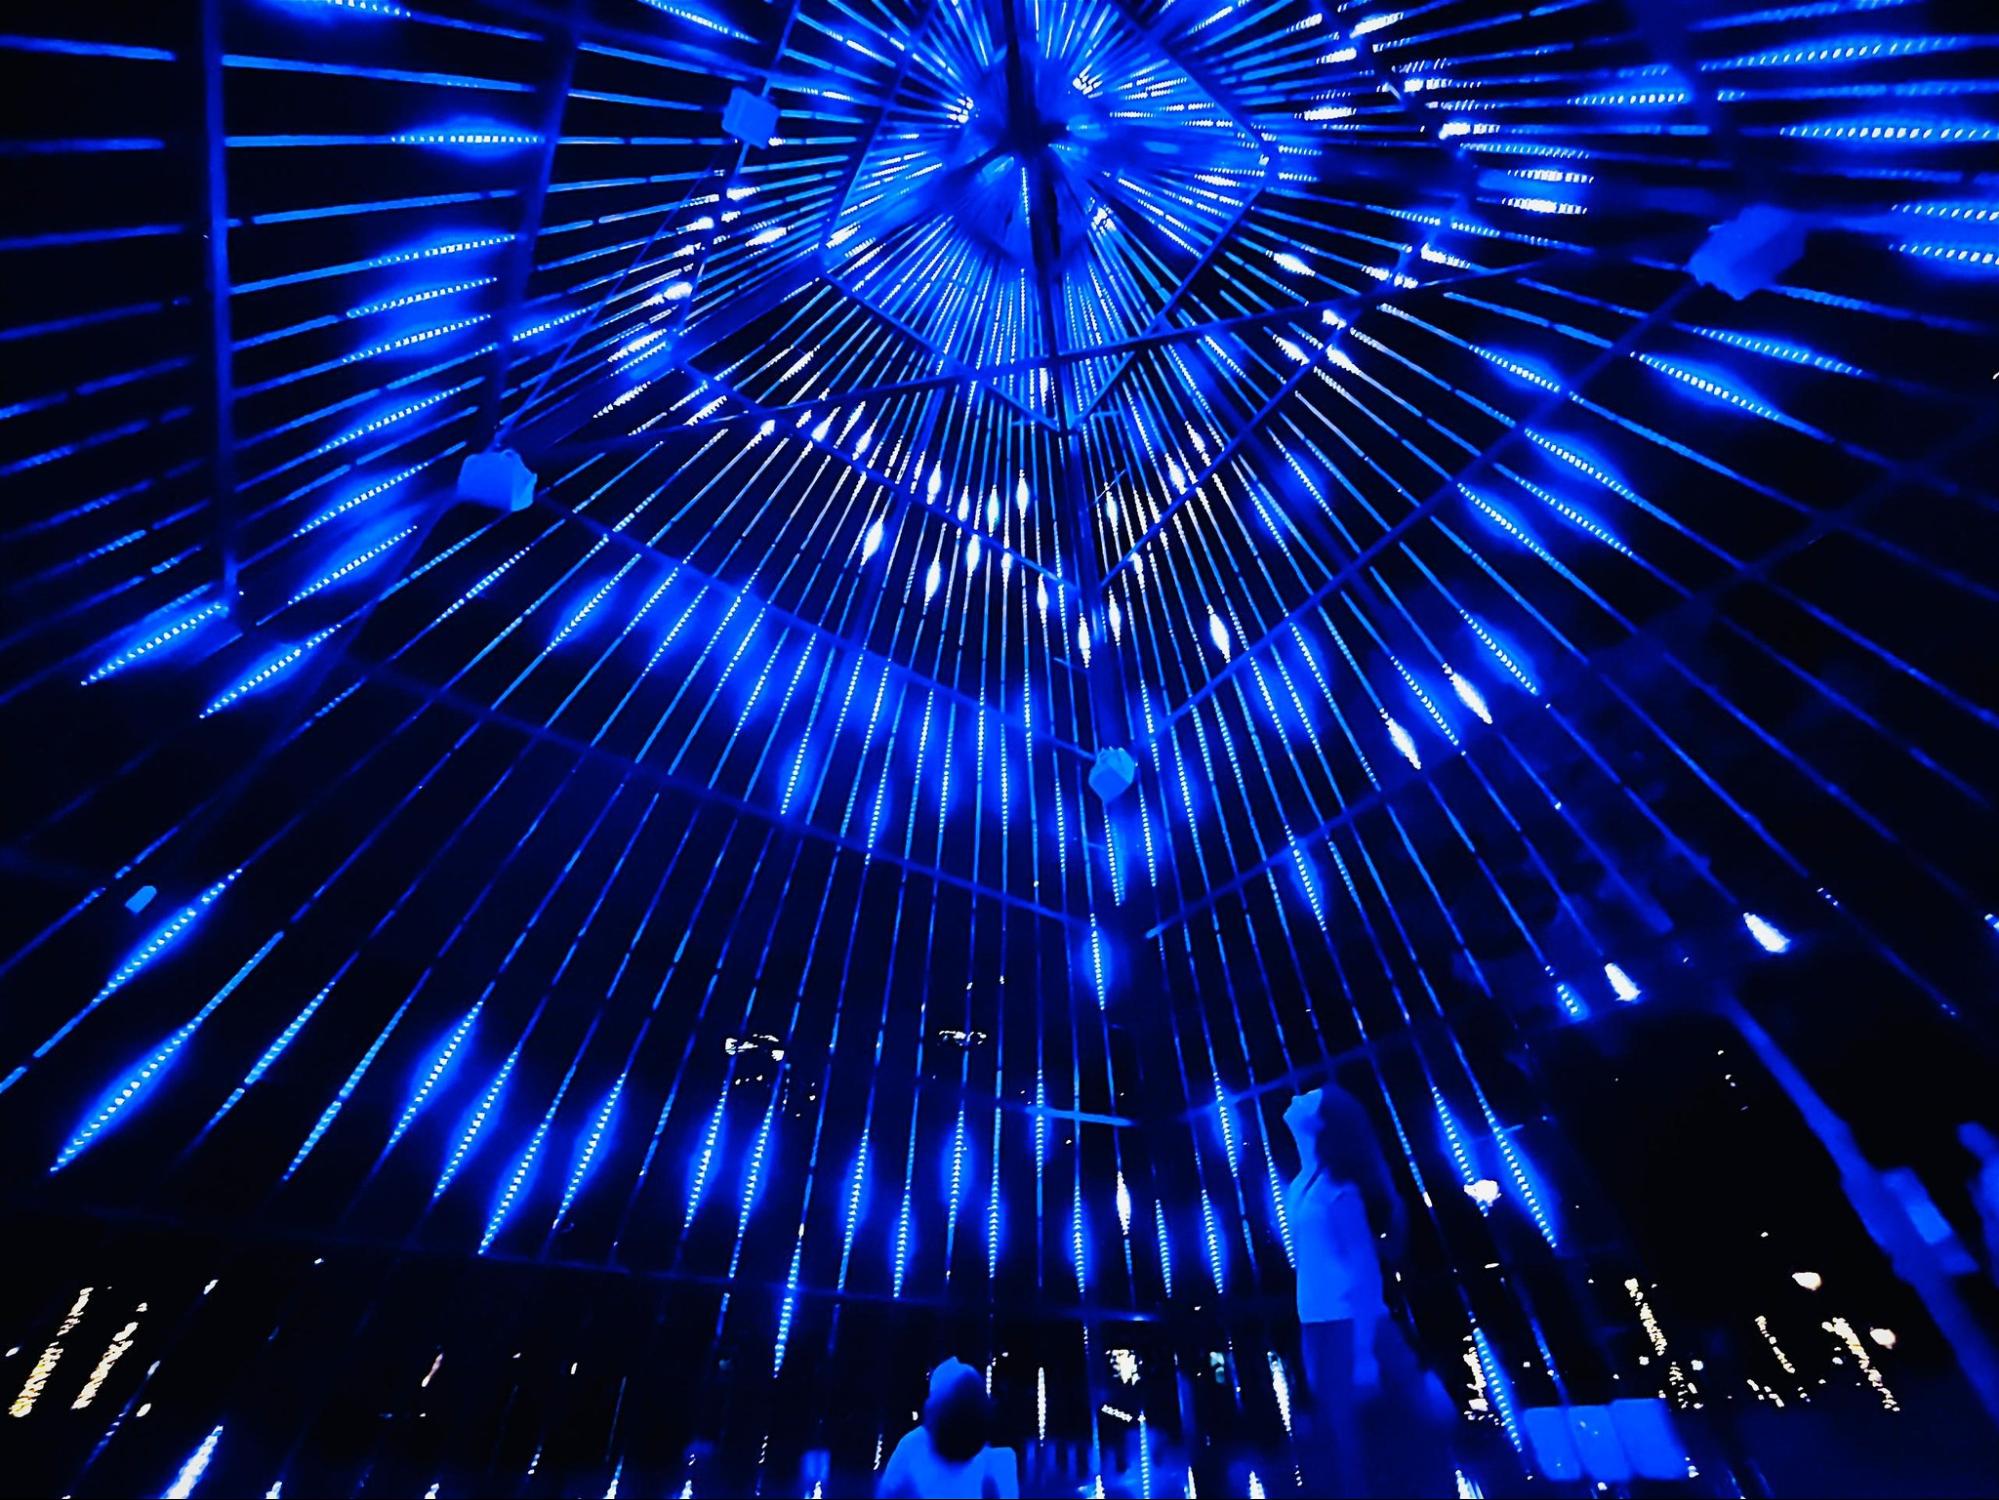 38-foot pyramid tree - Desa ParkCity’s year-end lights festival